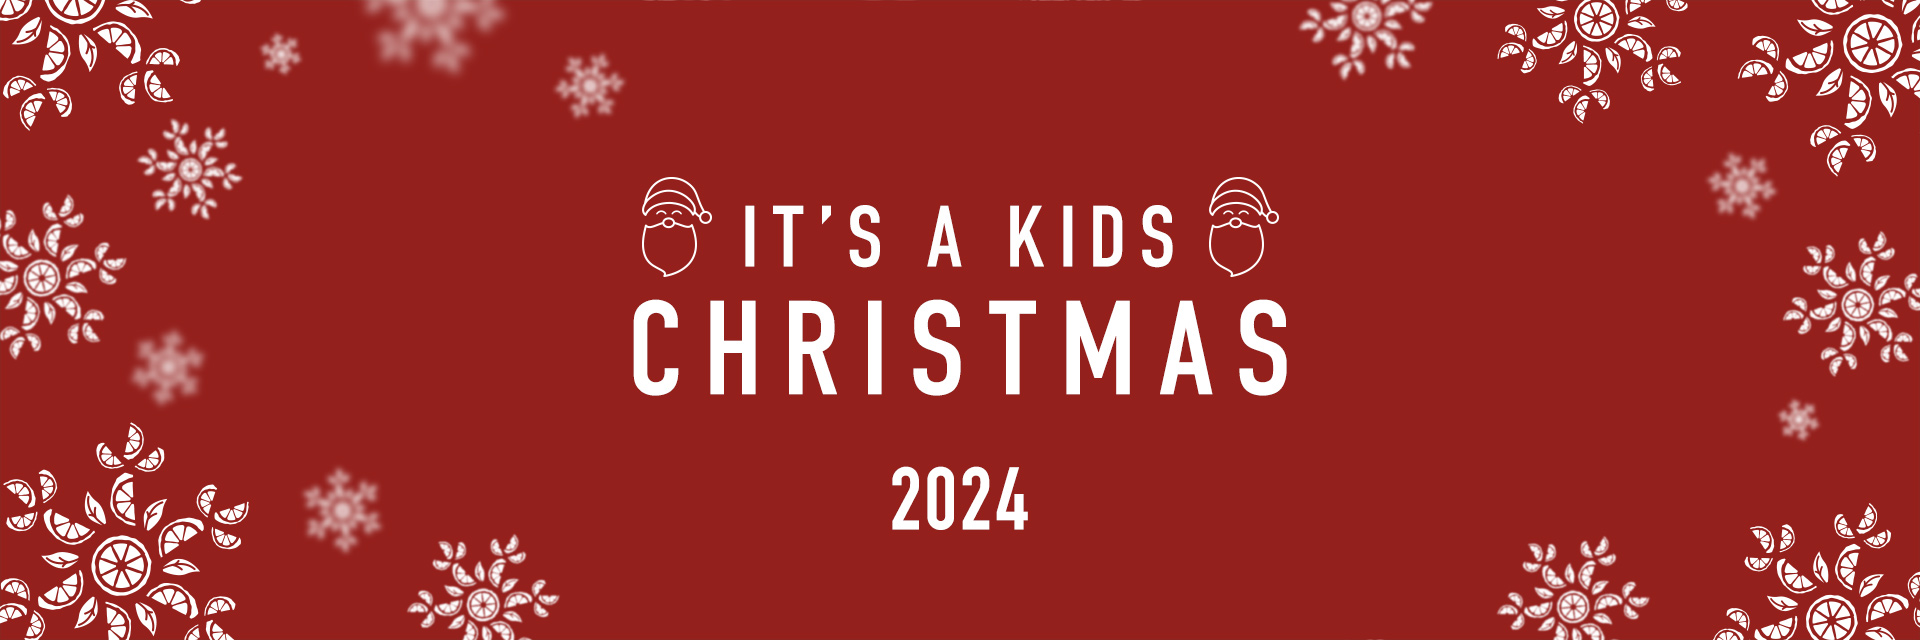 Kids Christmas Menu 2024 at The Beech Hurst